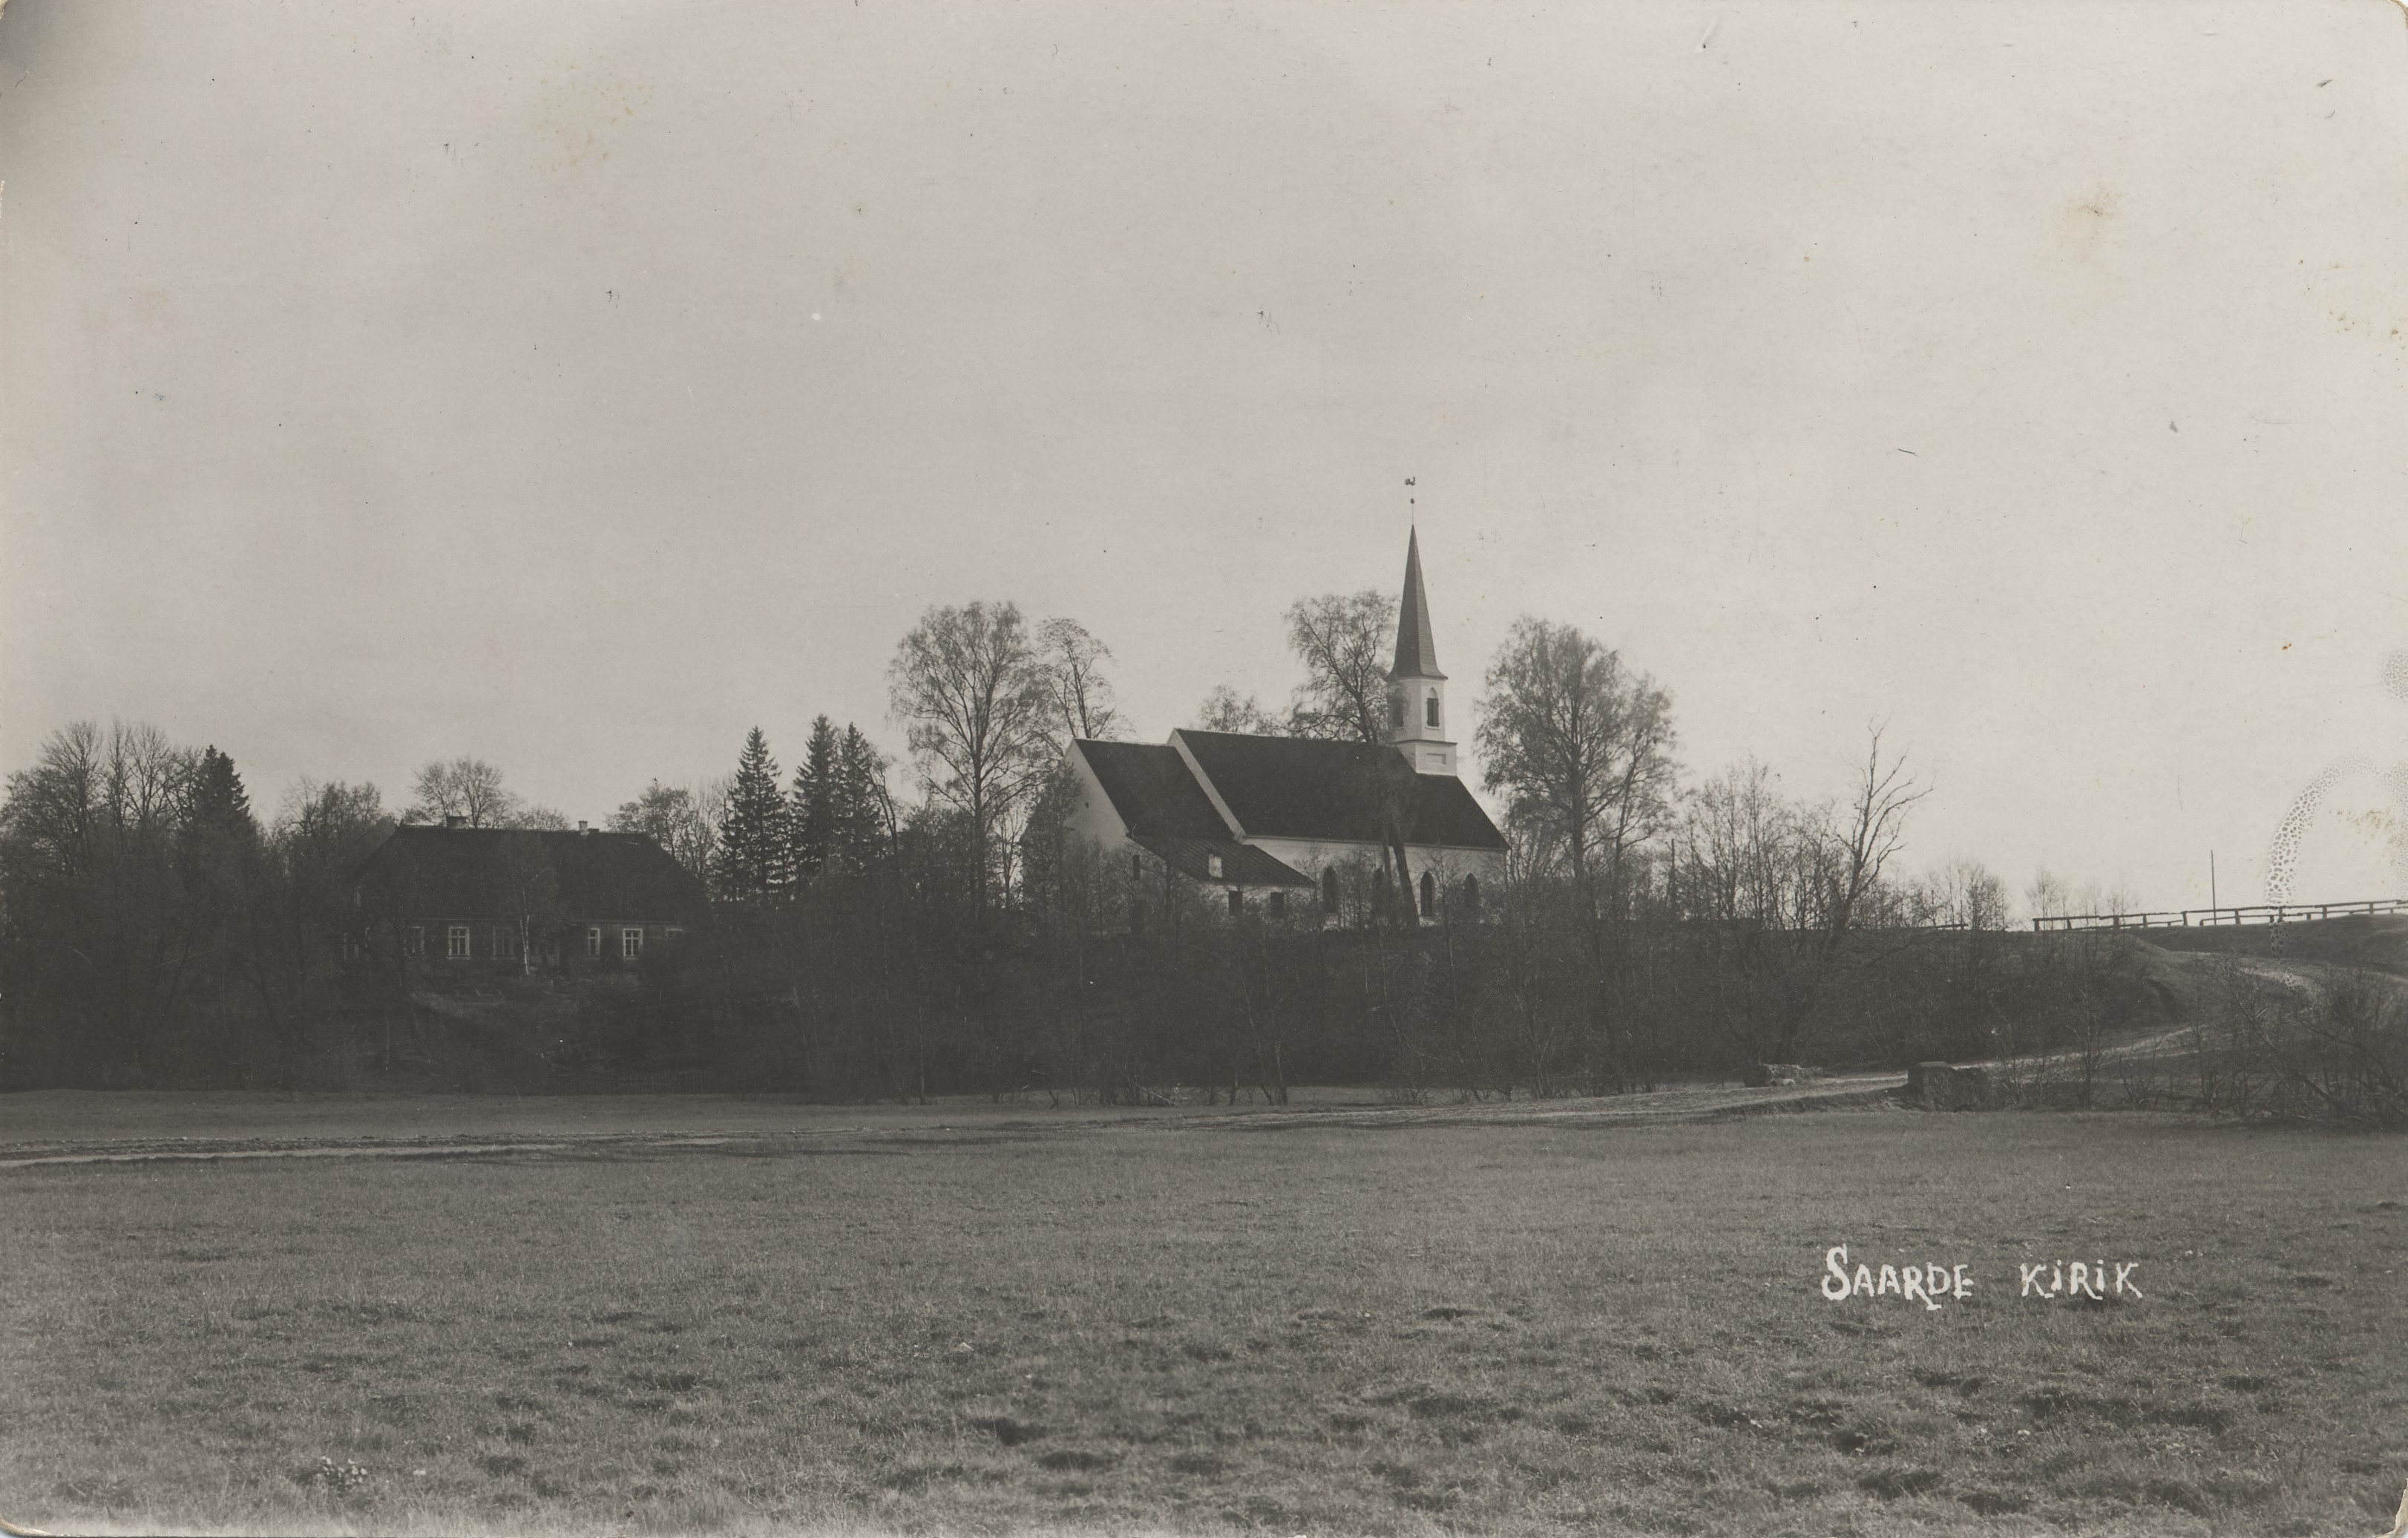 Saarde Church